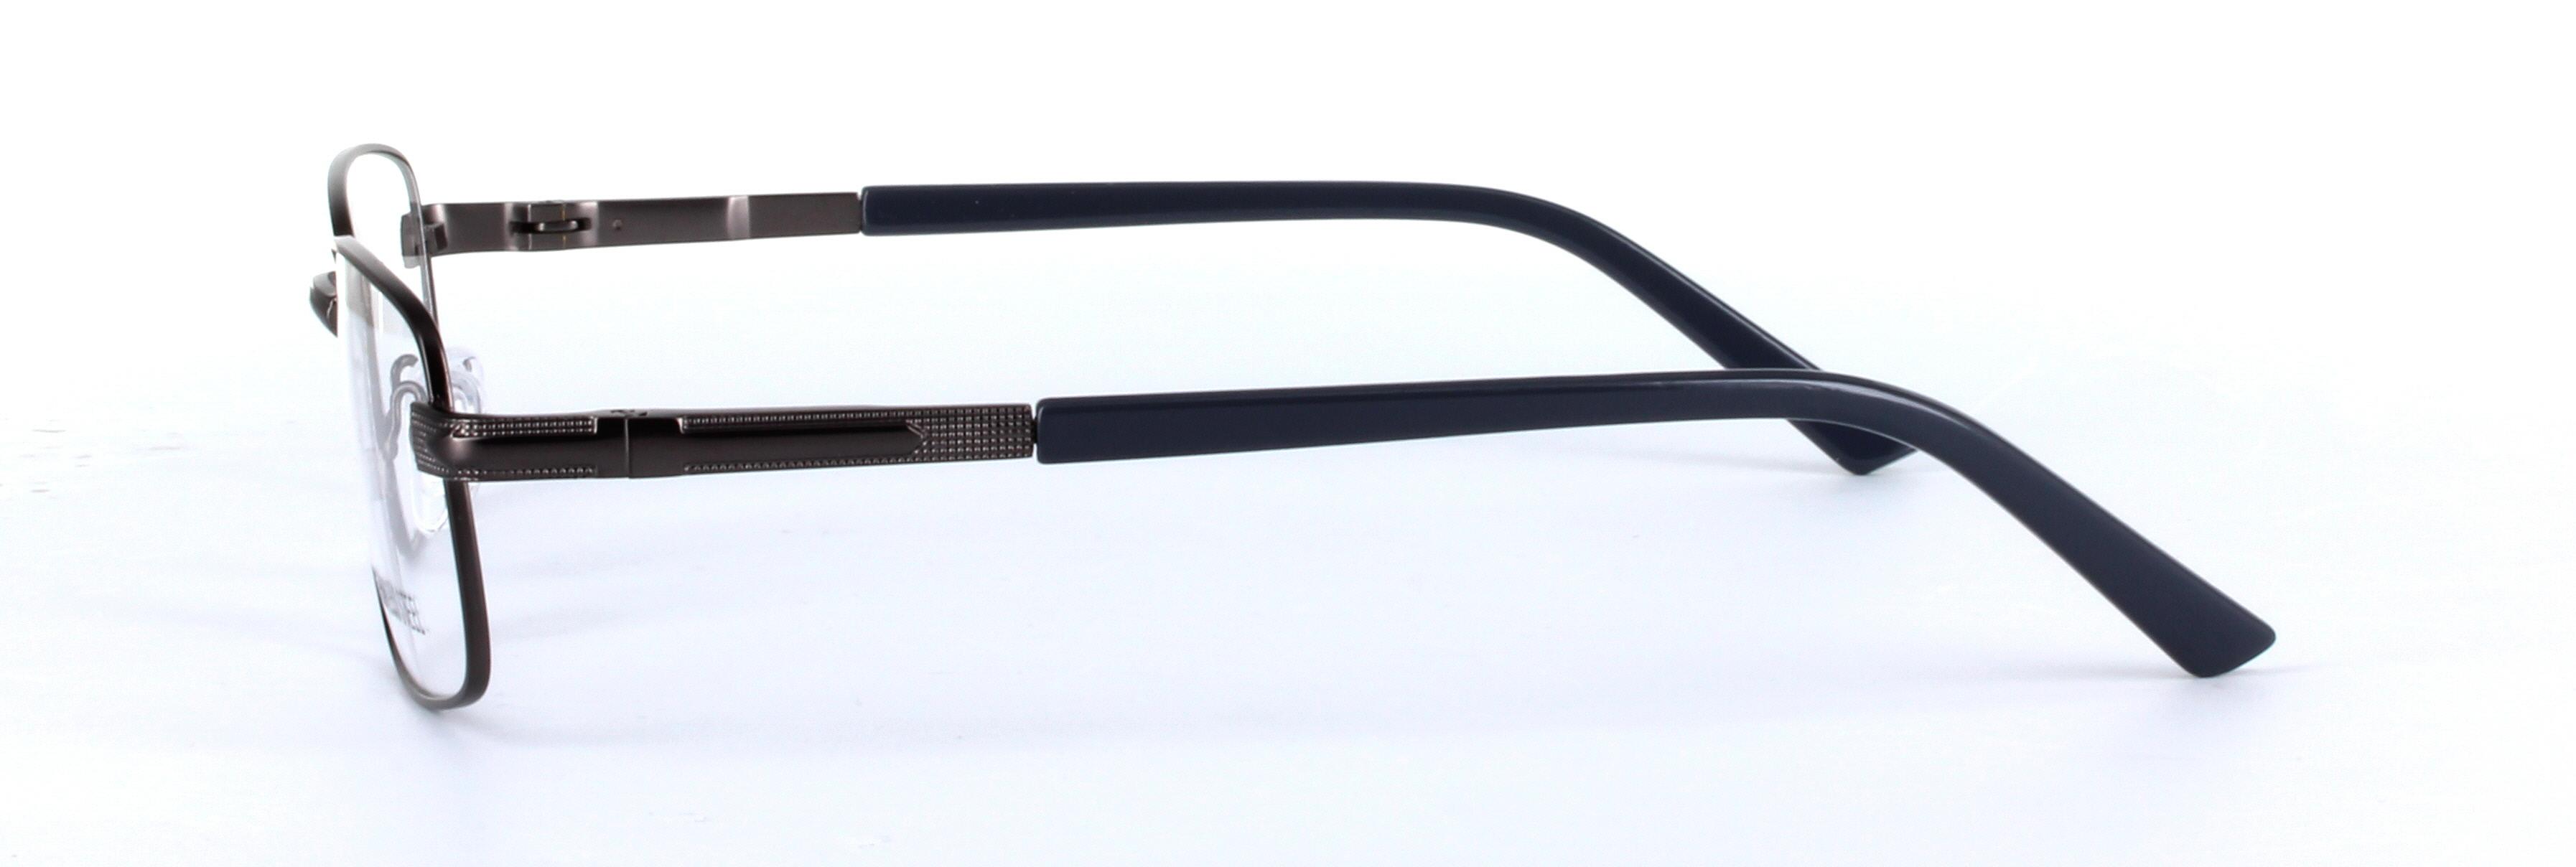 Lorenzo Bronze Full Rim Rectangular Metal Glasses - Image View 2